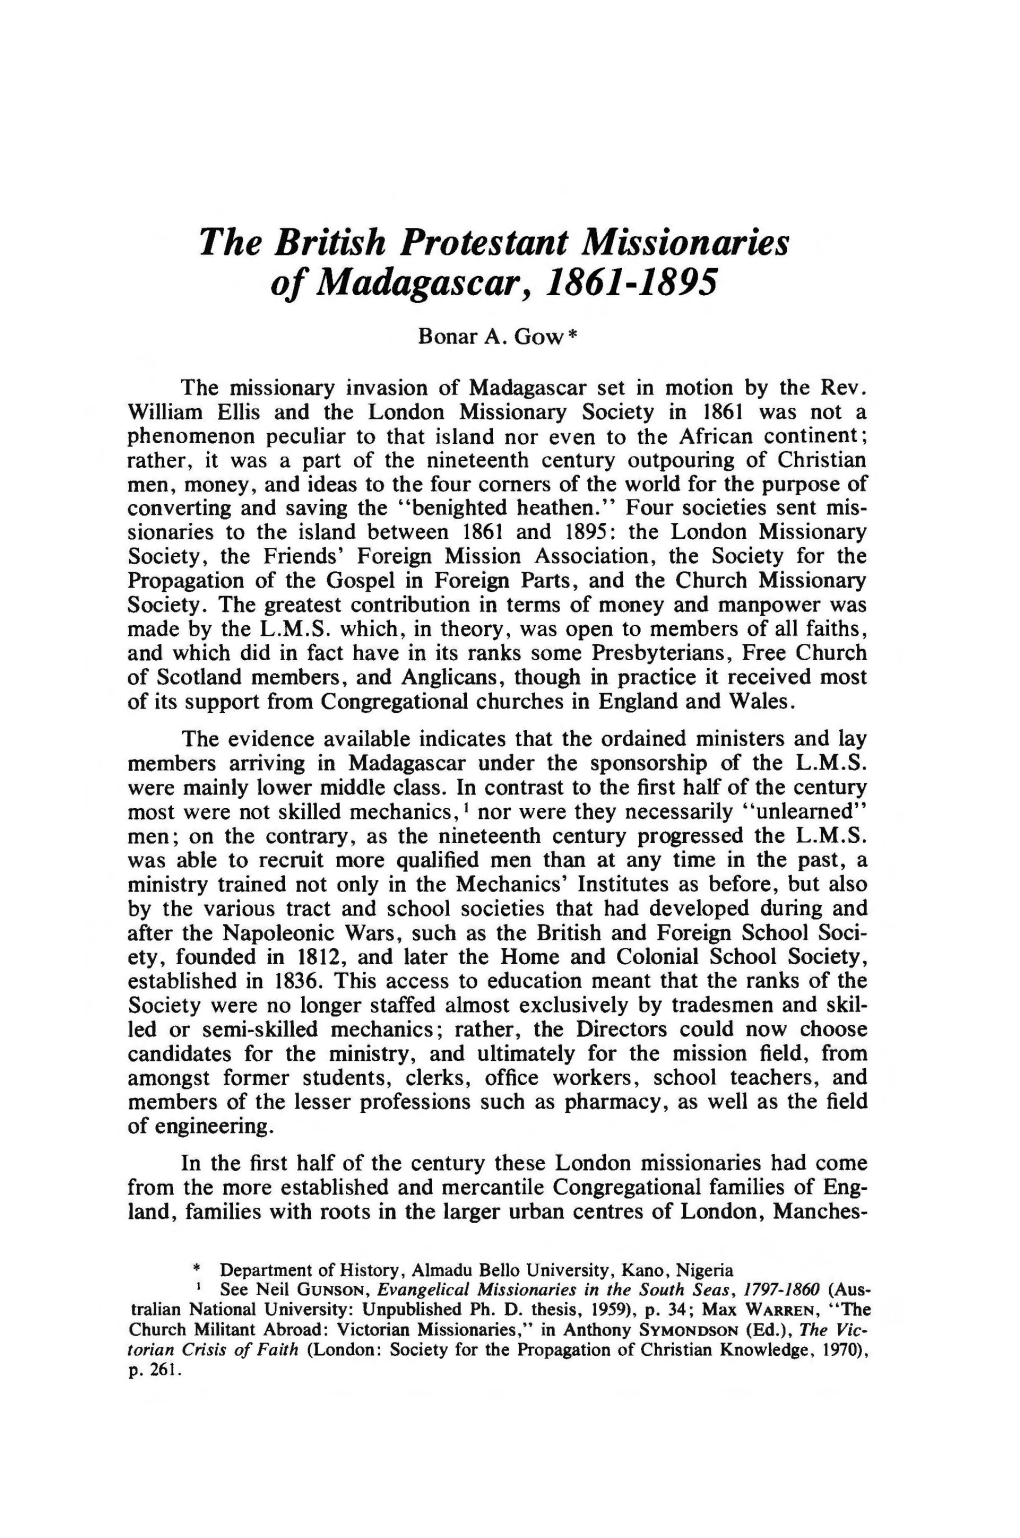 The British Protestant Missionaries of Madagascar, 1861-1895